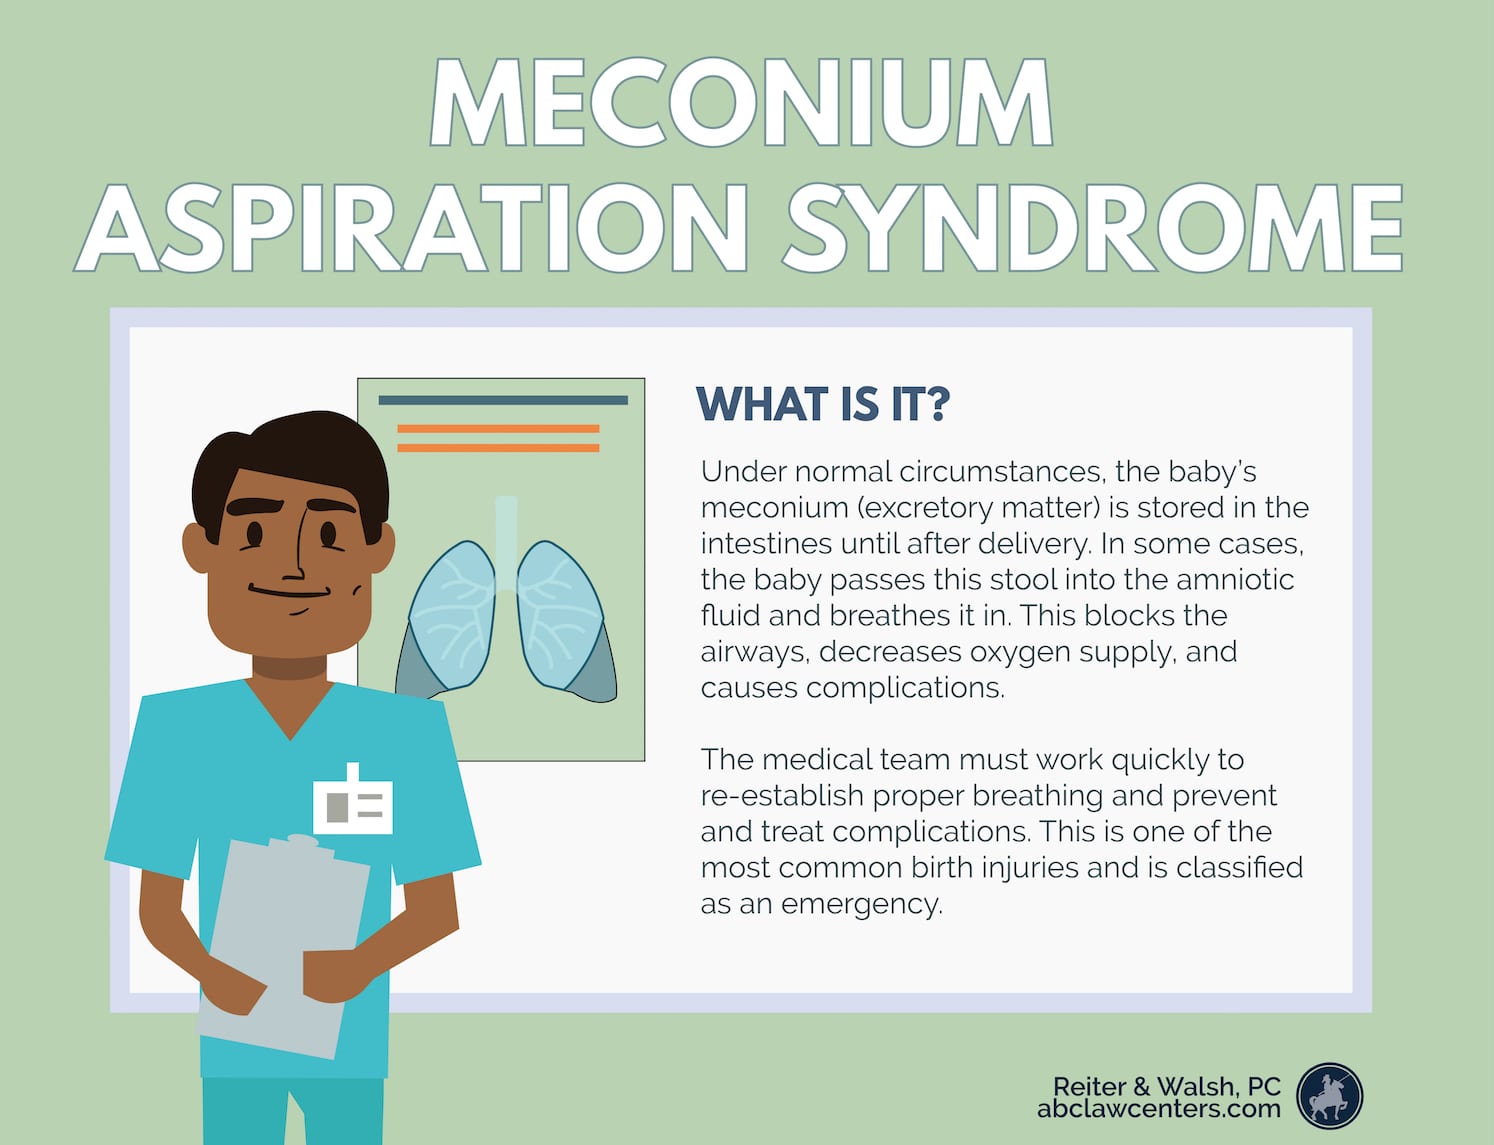 Meconium Aspiration Syndrome